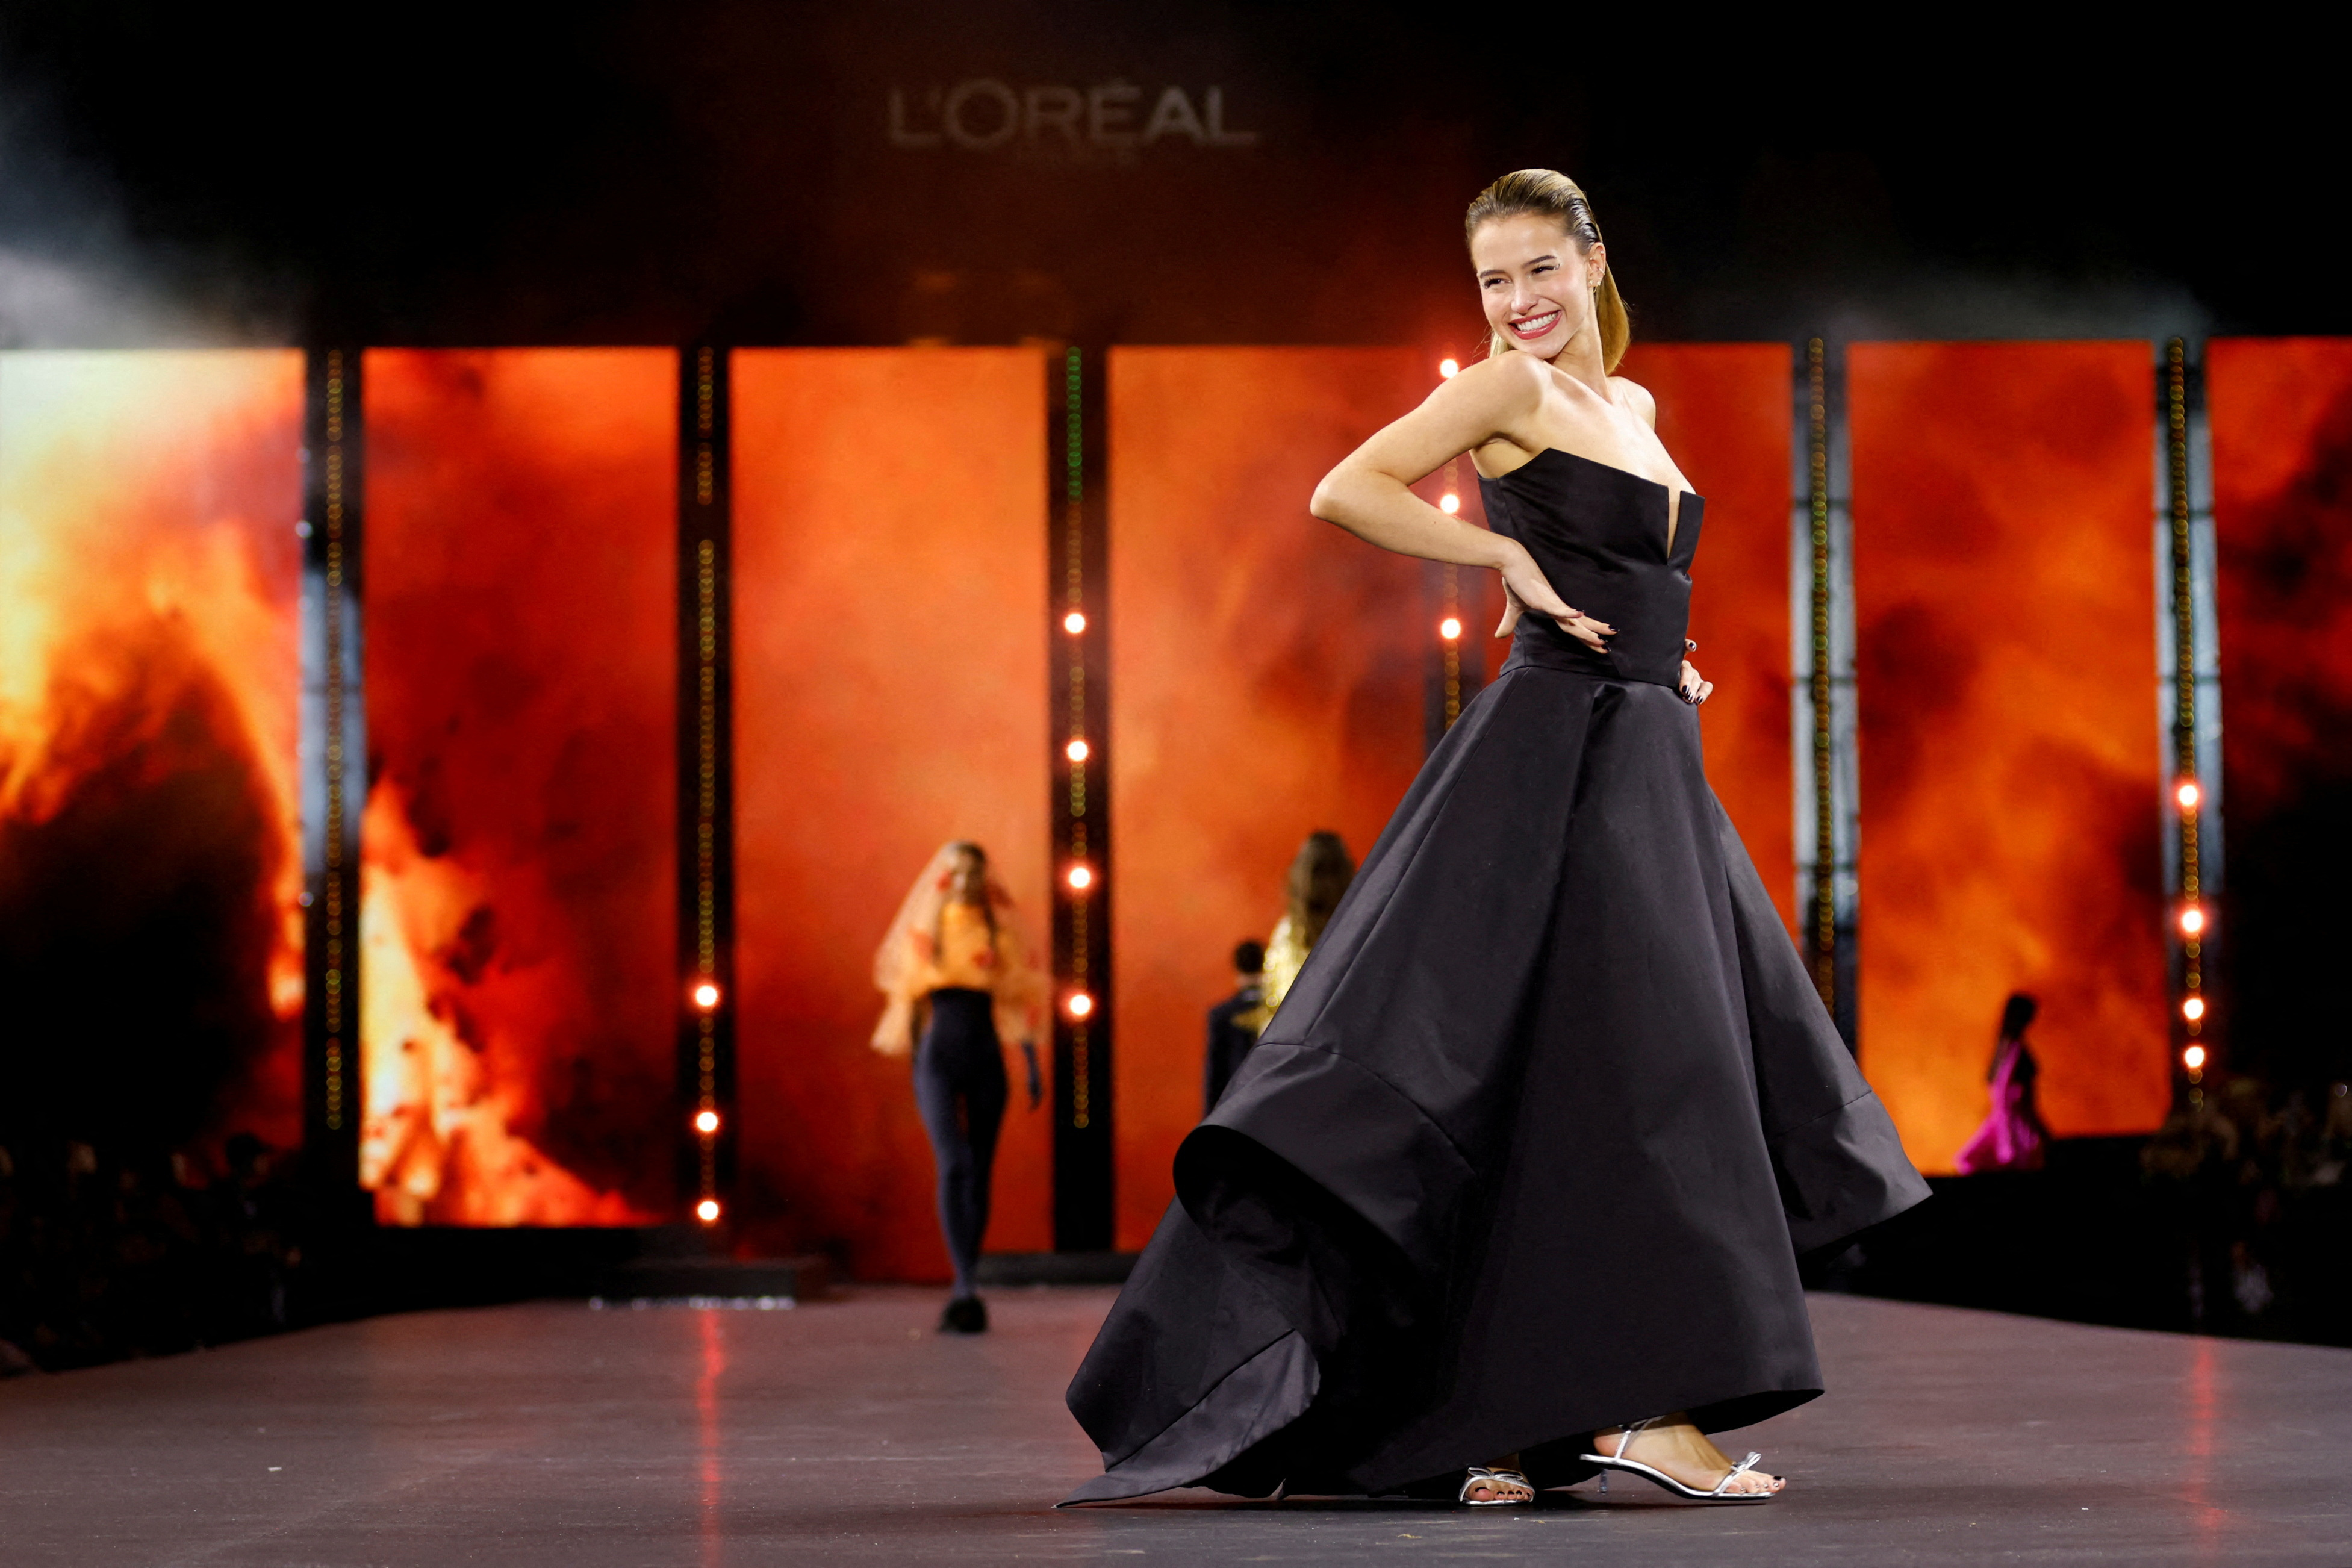 L'Oreal Paris hosts exuberant catwalk presentation at fashion week | Reuters